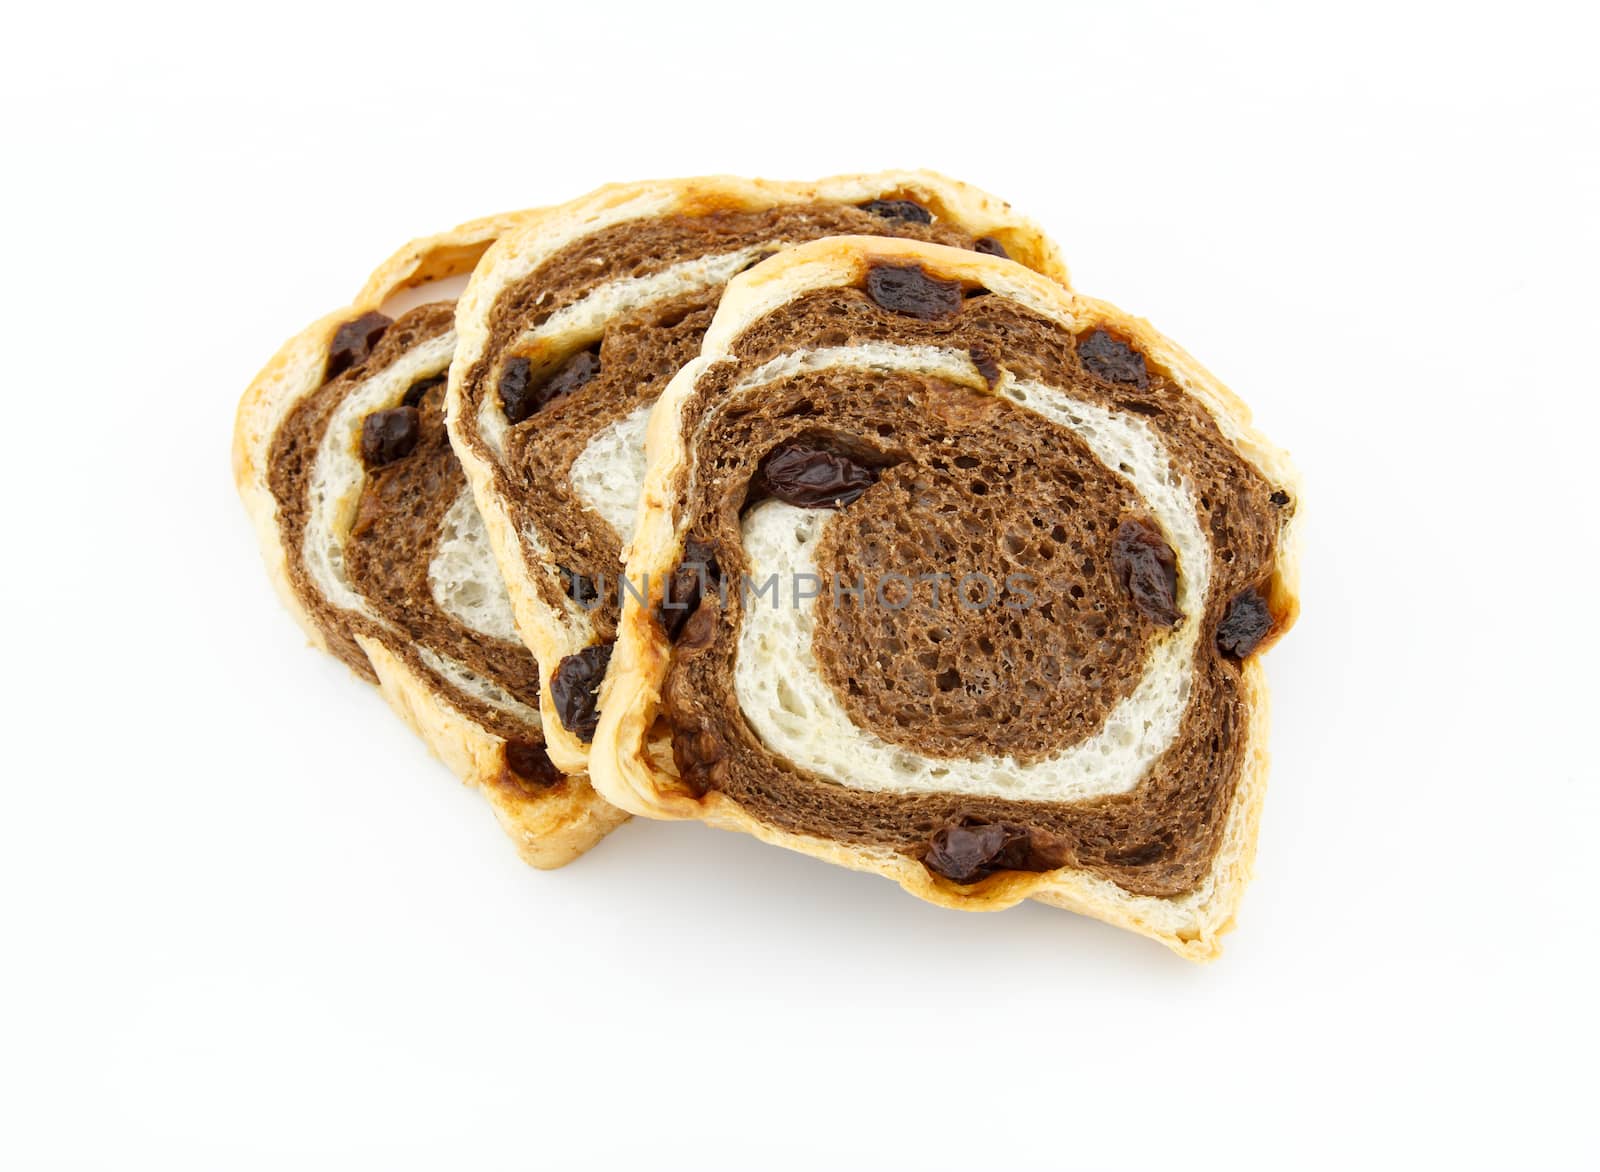 Sliced raisin chocolate bread on white background